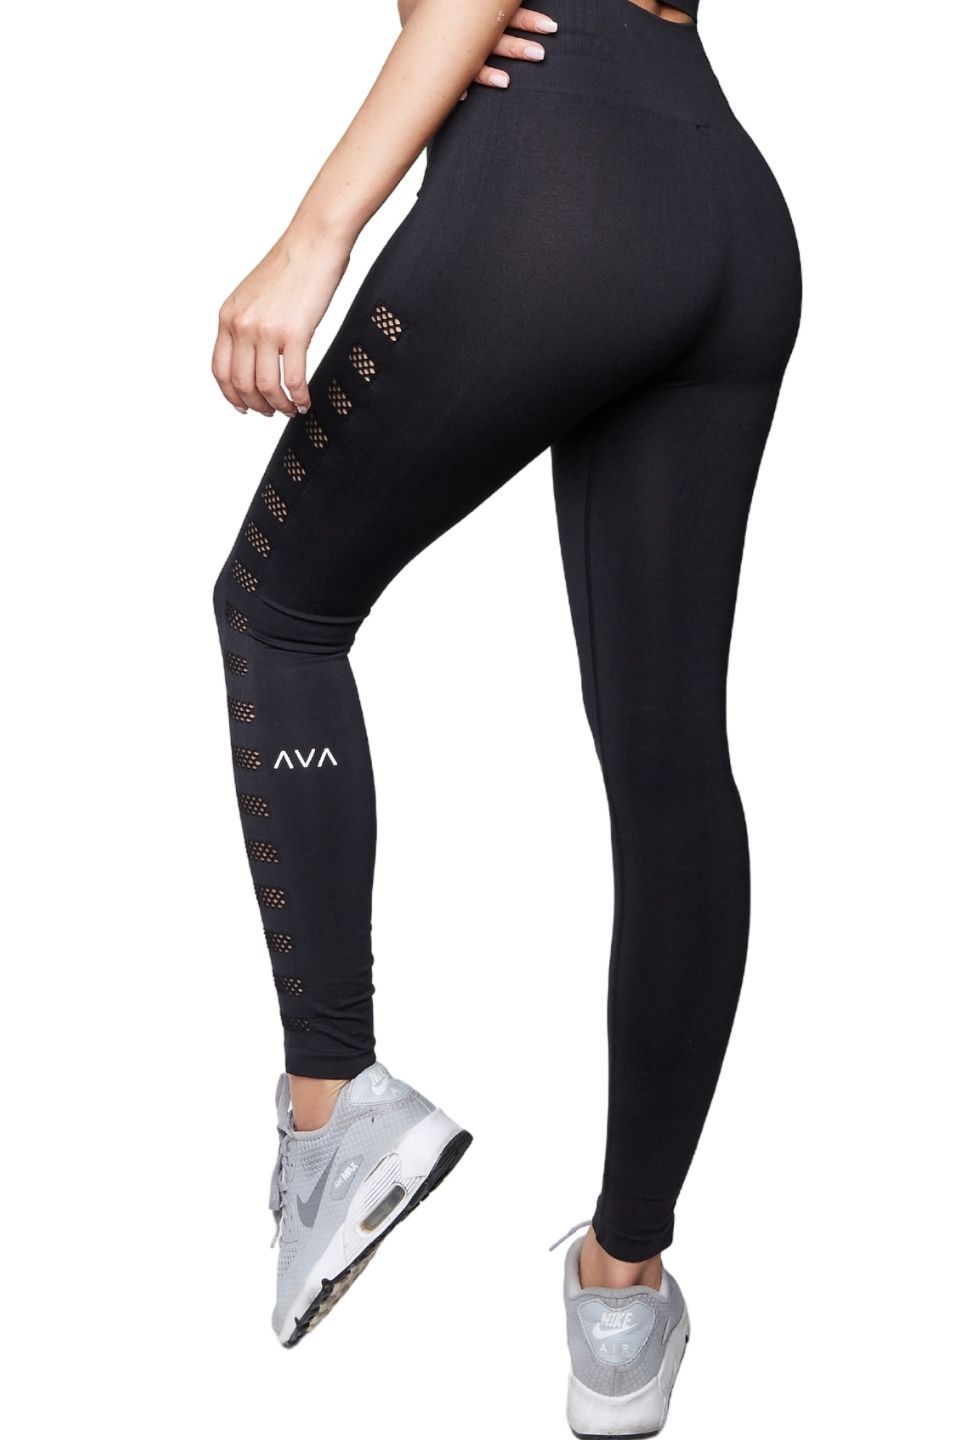  FOXWISH Women's Mesh Panel Side High Waist Yoga Pants Skinny  Workout Active Leggings Black Grey S : Clothing, Shoes & Jewelry